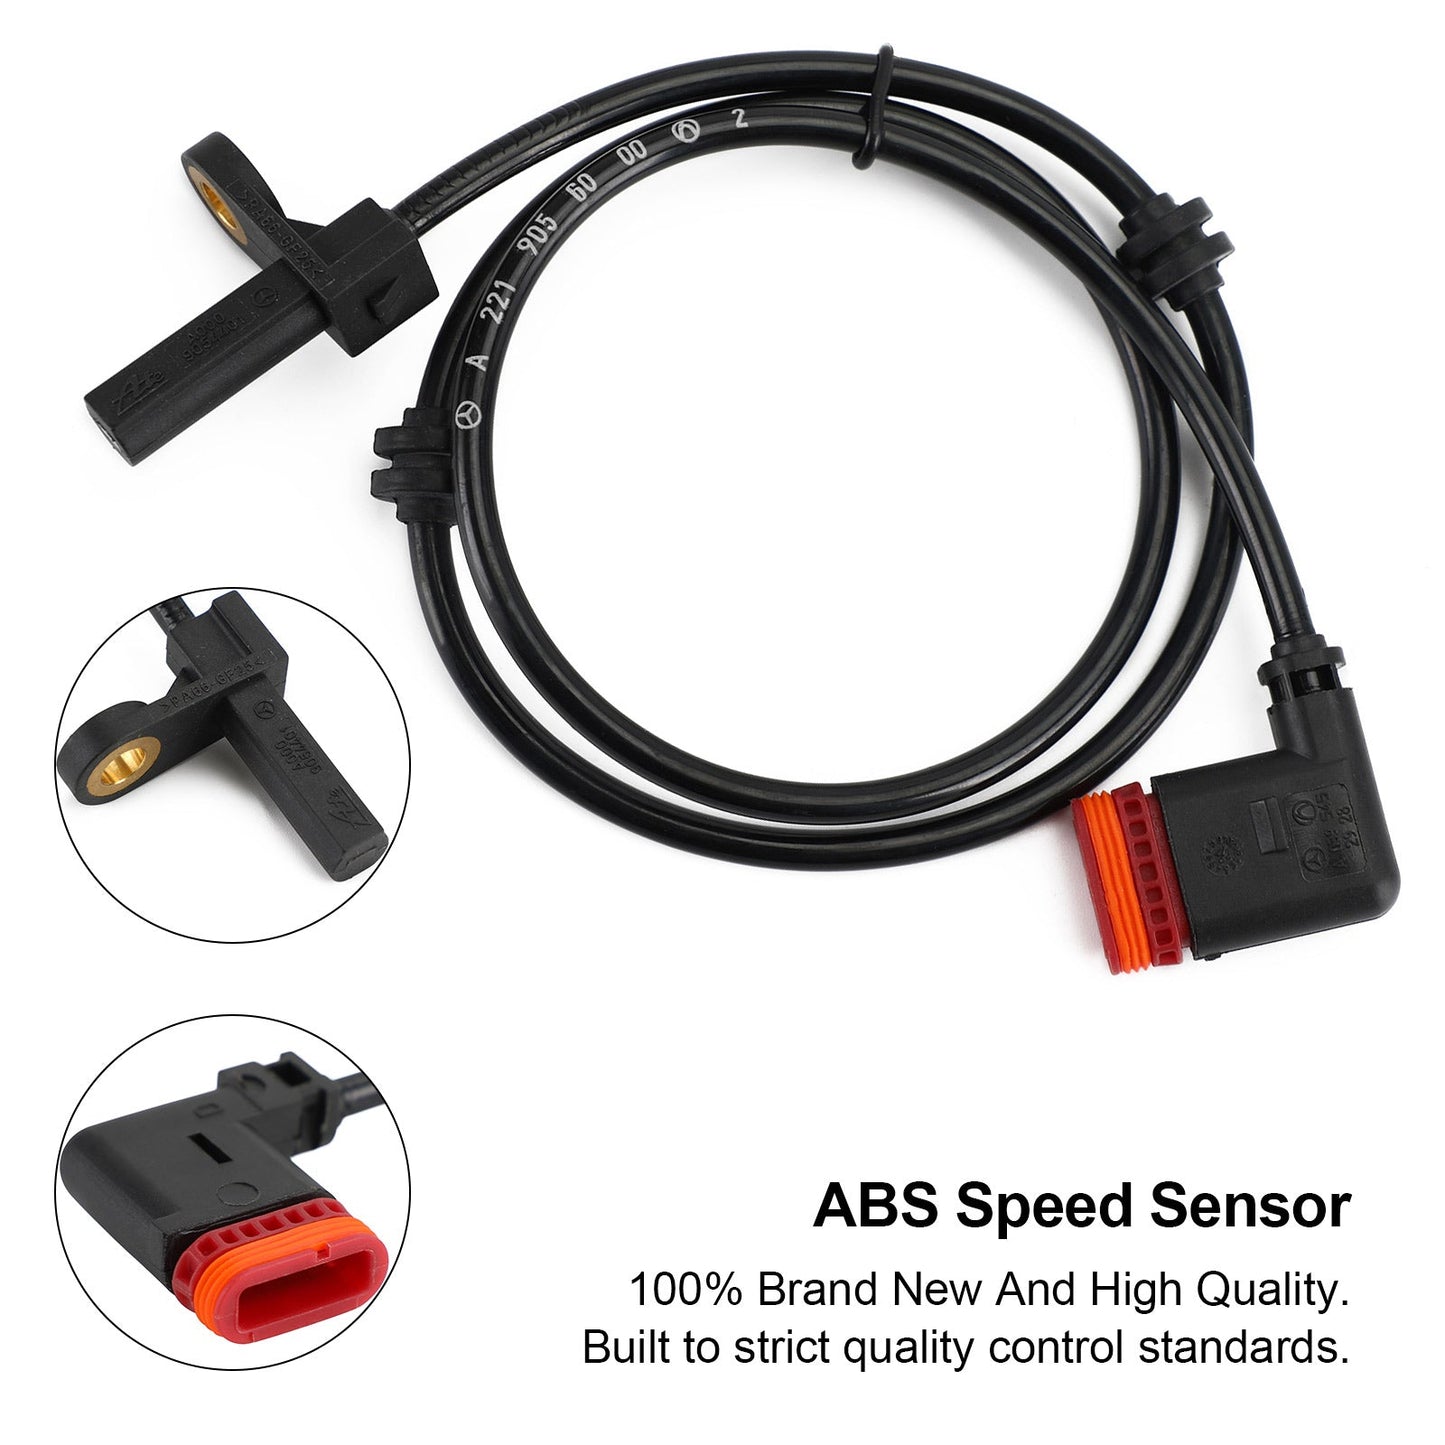 Rear L/R ABS Speed Sensor A2219056000 For Mercedes S Class W221